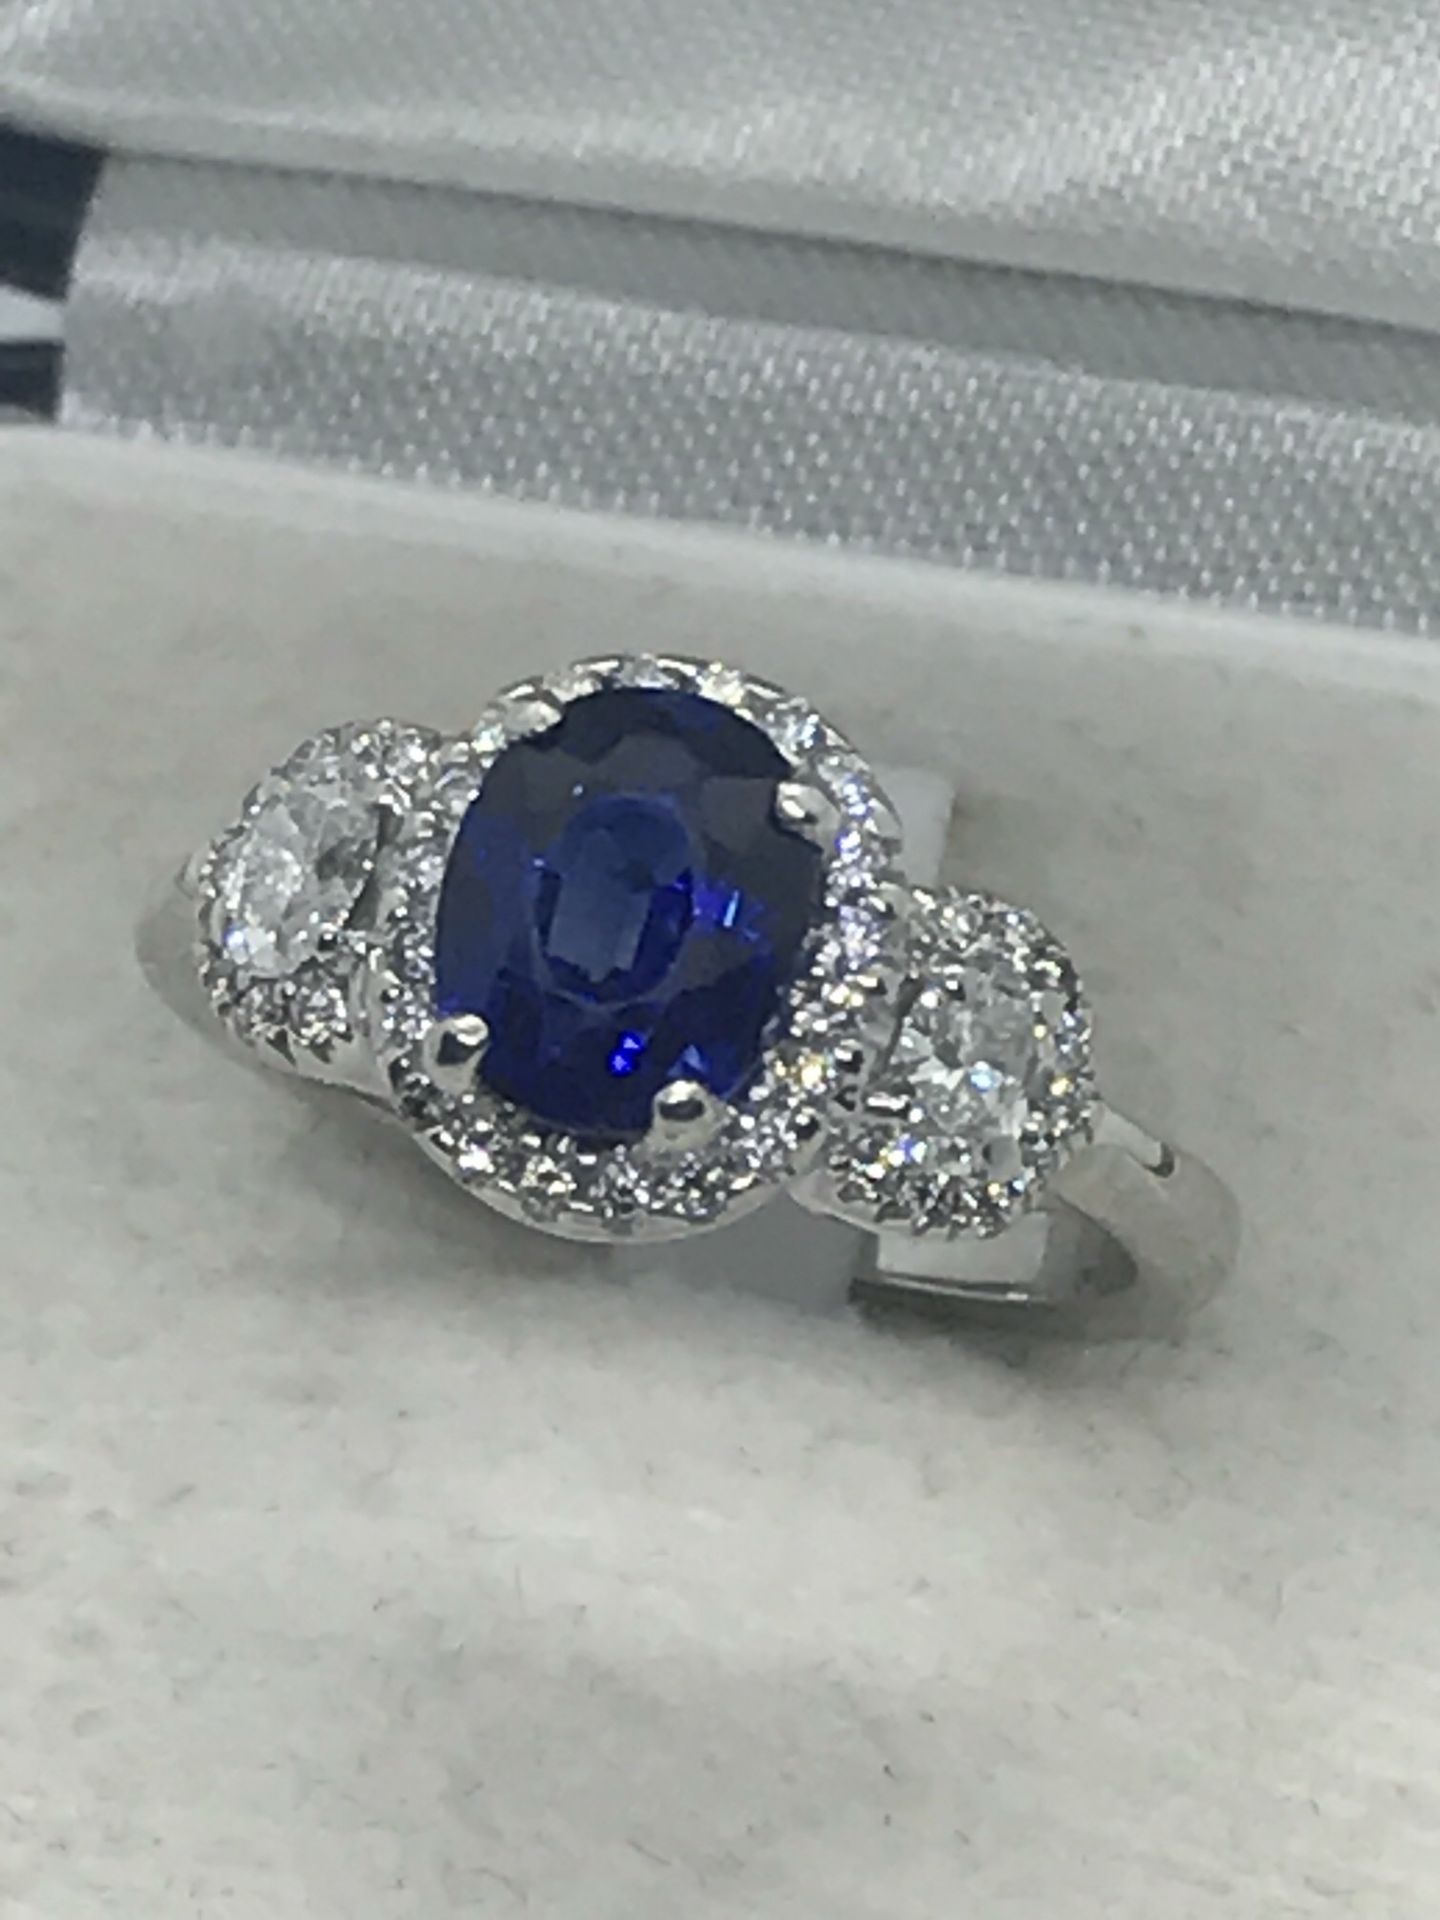 STUNNING BLUE SAPPHIRE & DIAMOND RING SET IN 18ct WHITE GOLD - Image 4 of 4